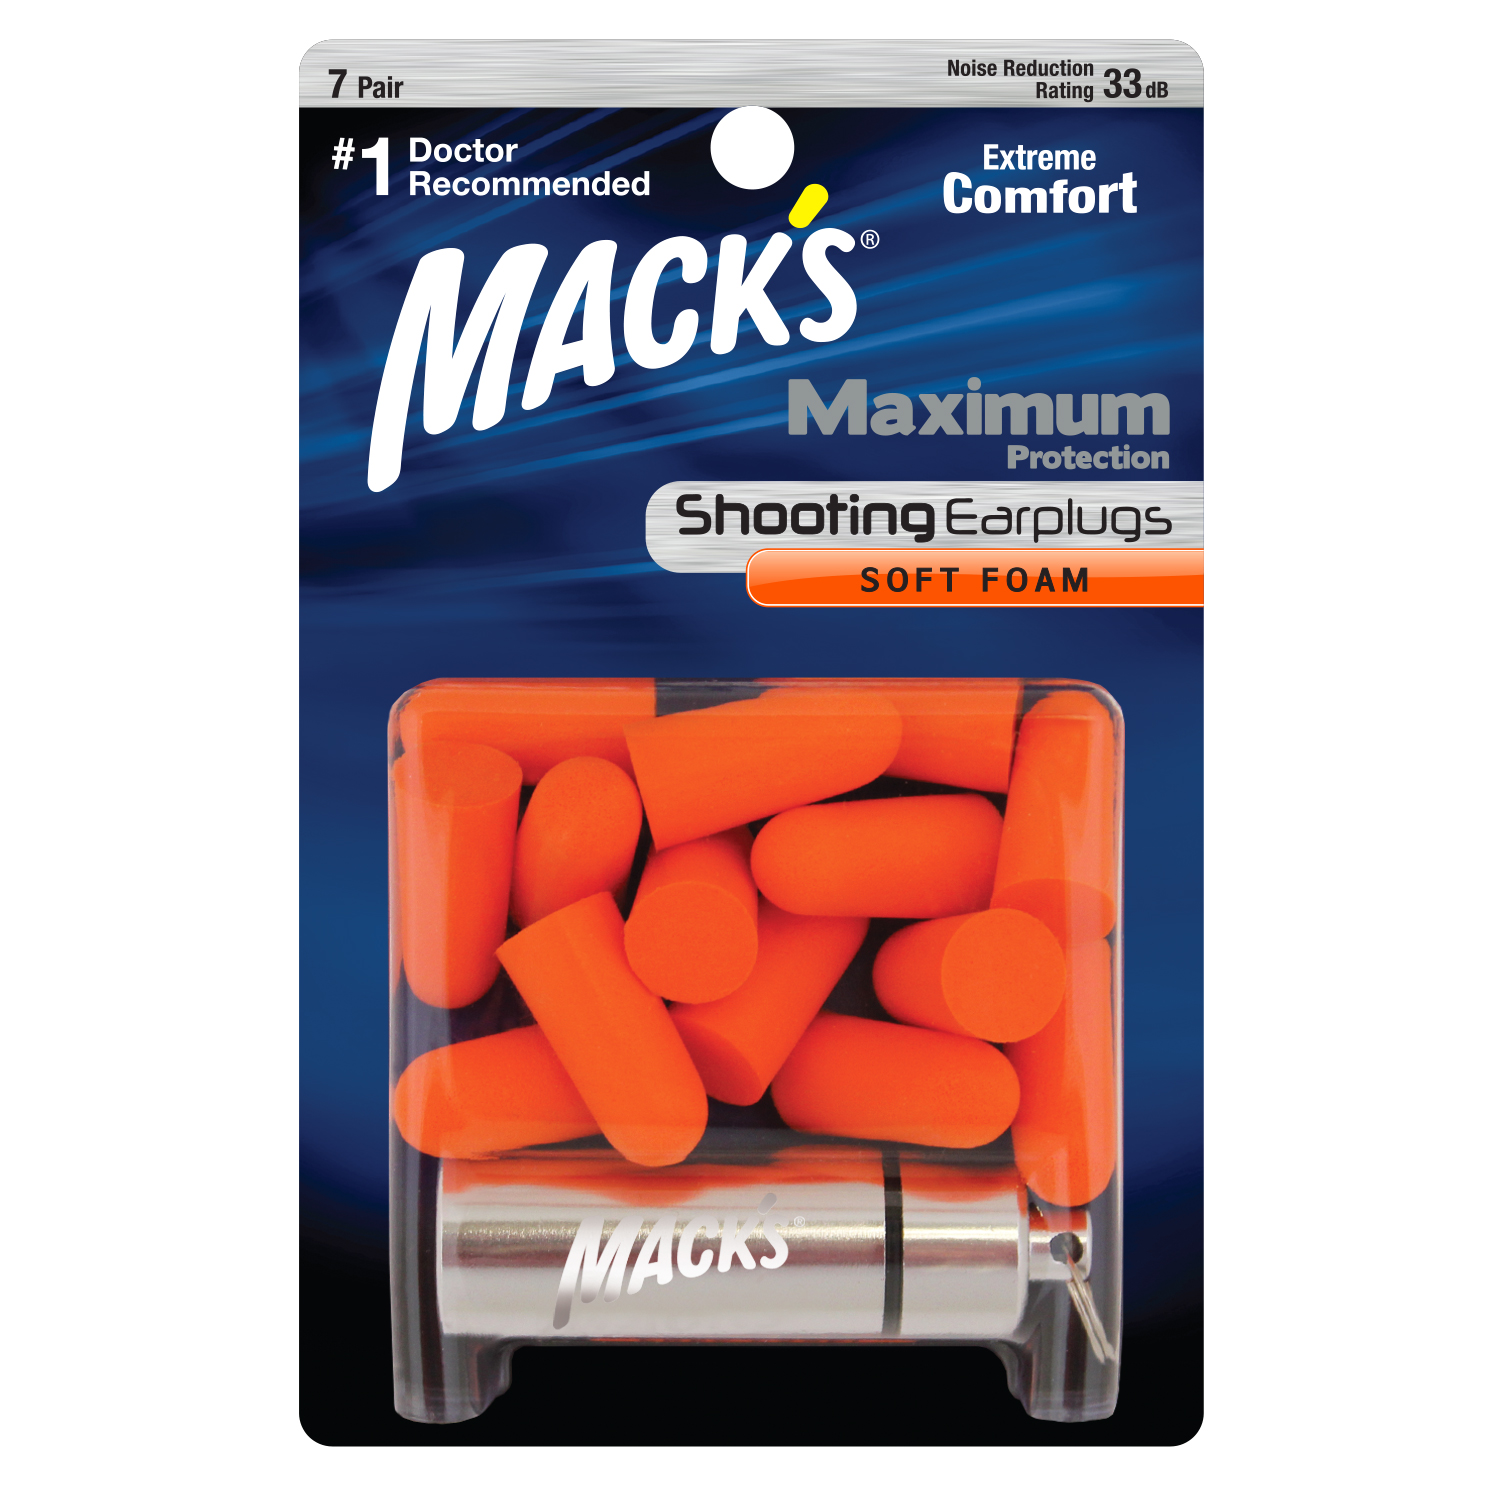 Shooting Maximum Protection Soft Foam Ear Plugs - Mack's Ear Plugs